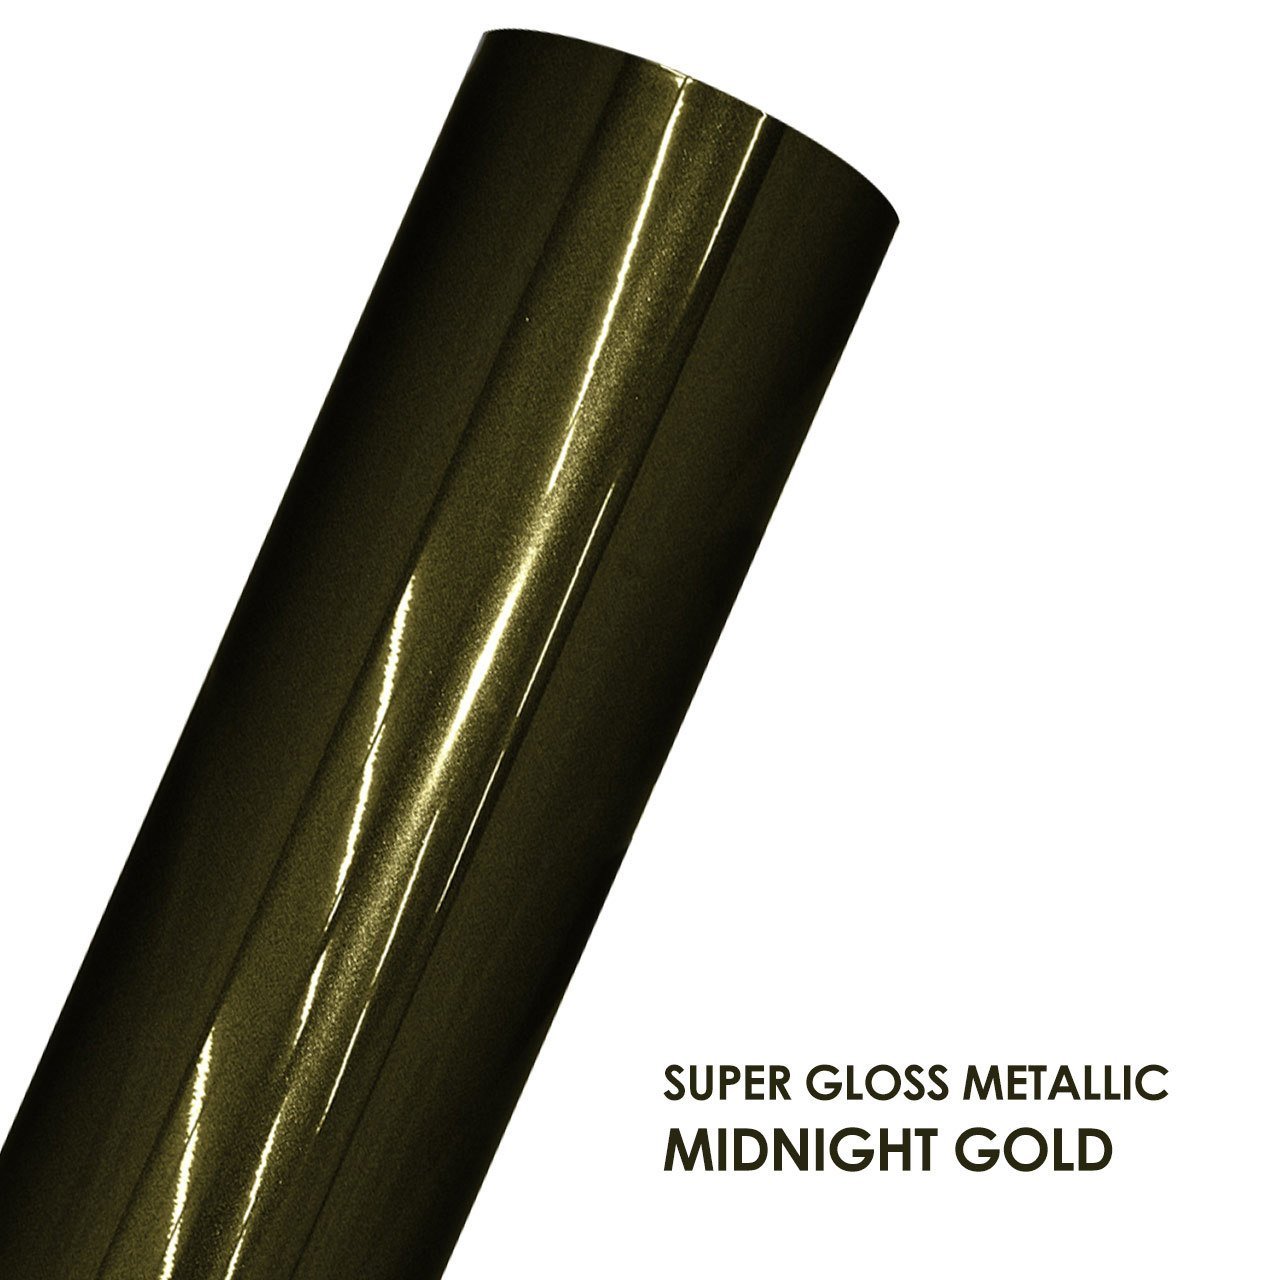 SUPER GLOSS METALLIC MIDNIGHT GOLD